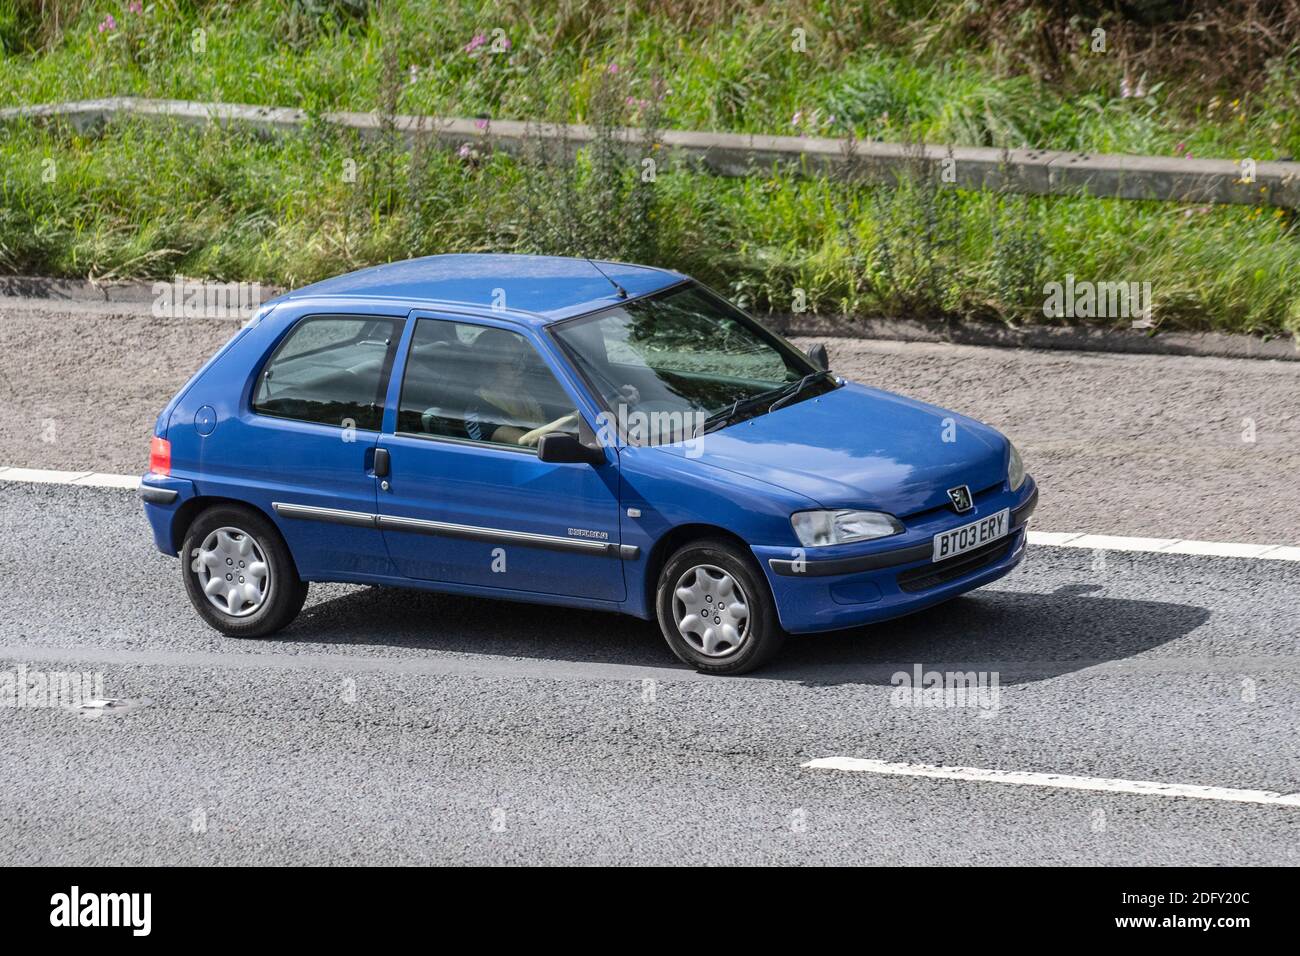 Peugeot fahren 106 -Fotos und -Bildmaterial in hoher Auflösung – Alamy